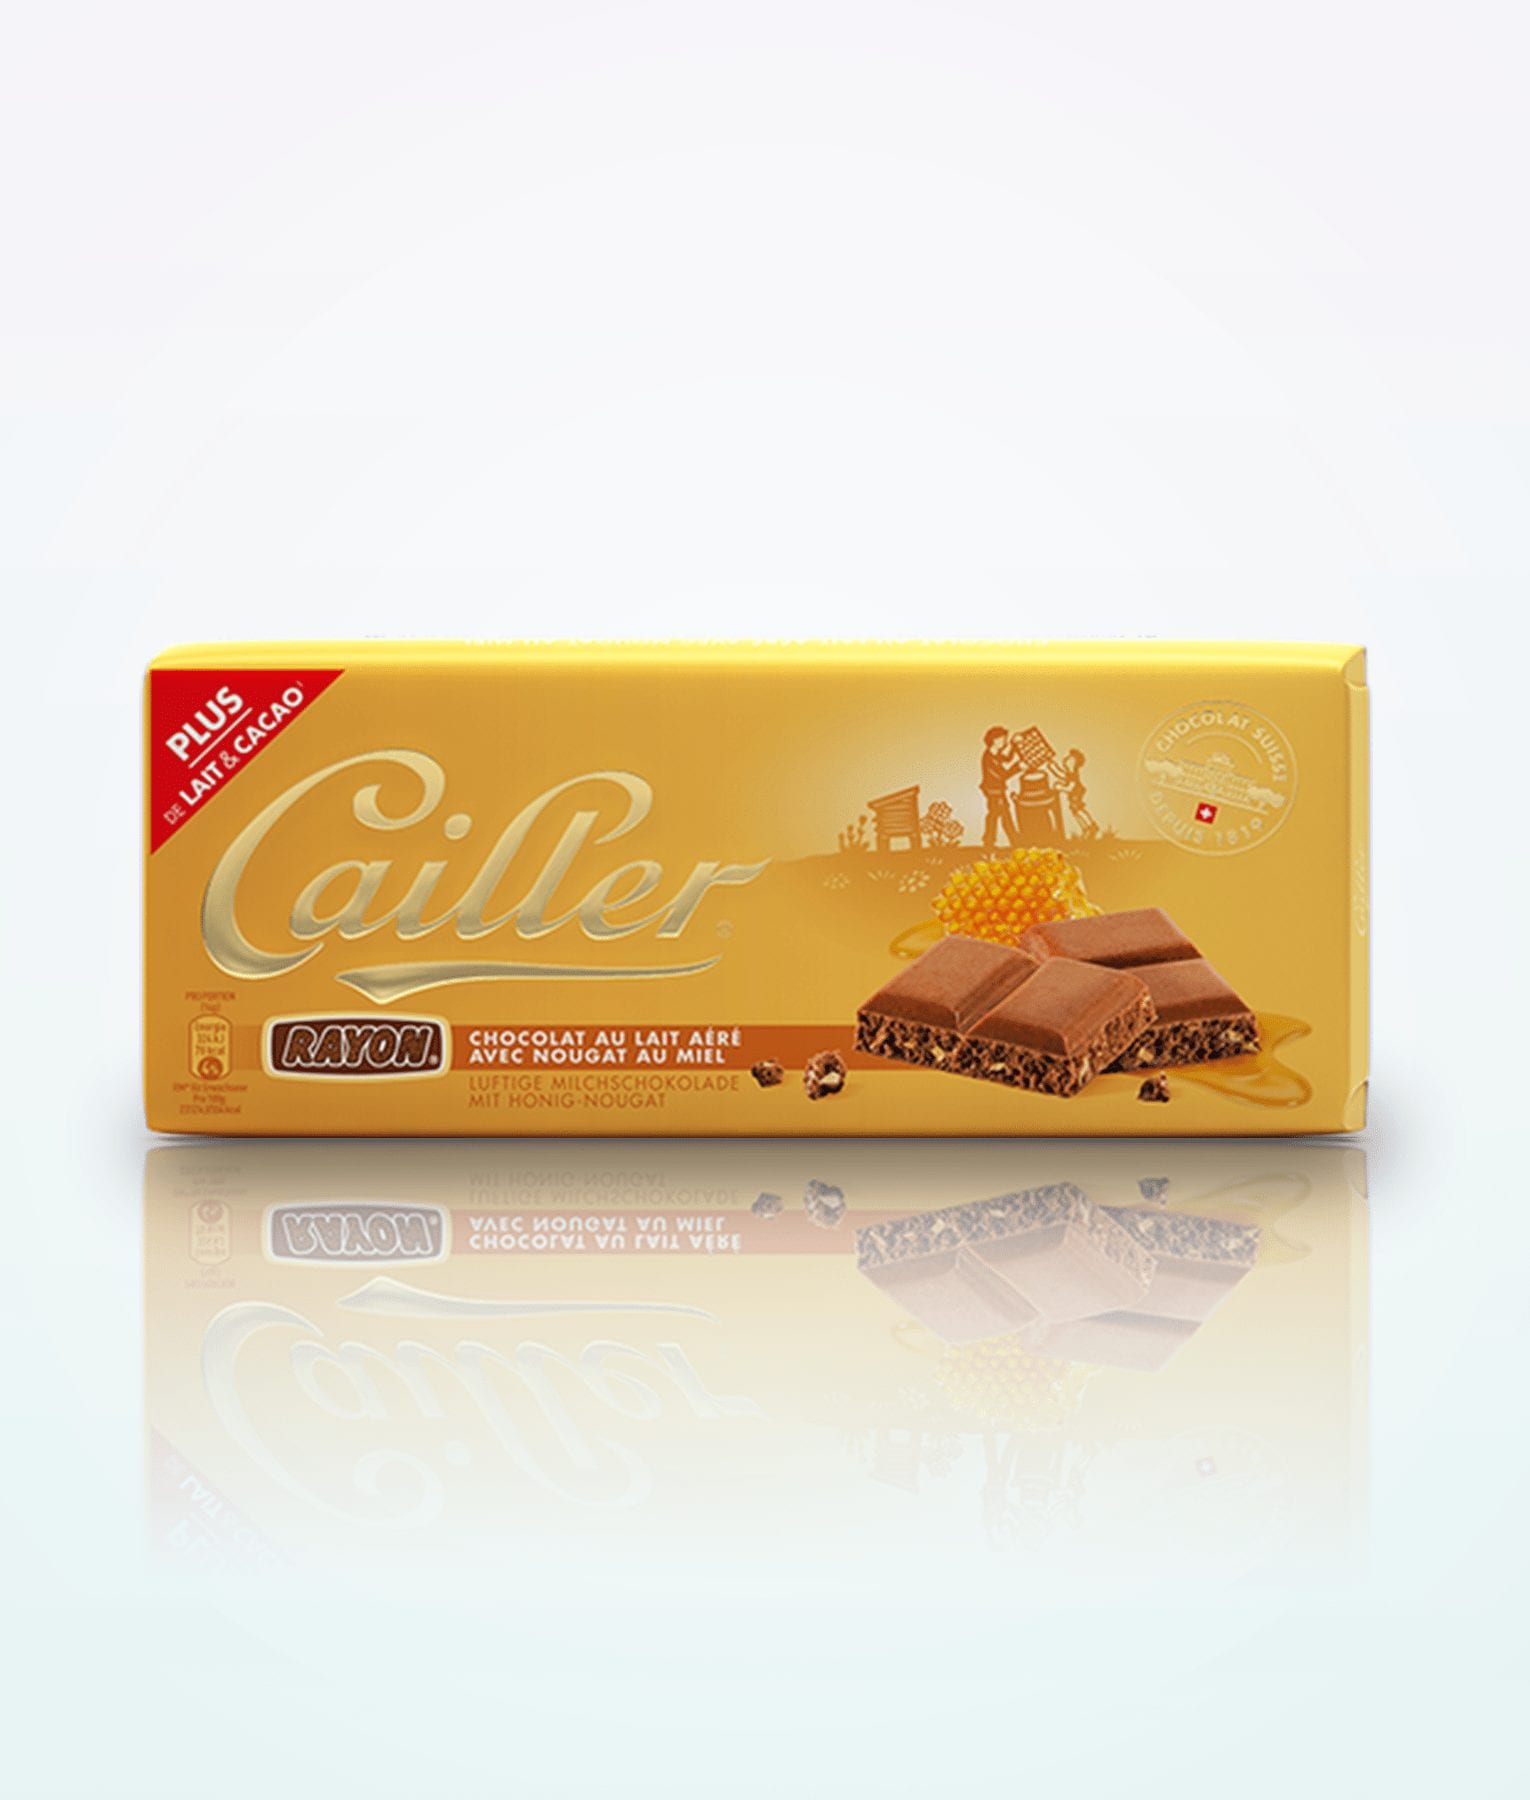 cailler-rayon-milk-honey-chocolate